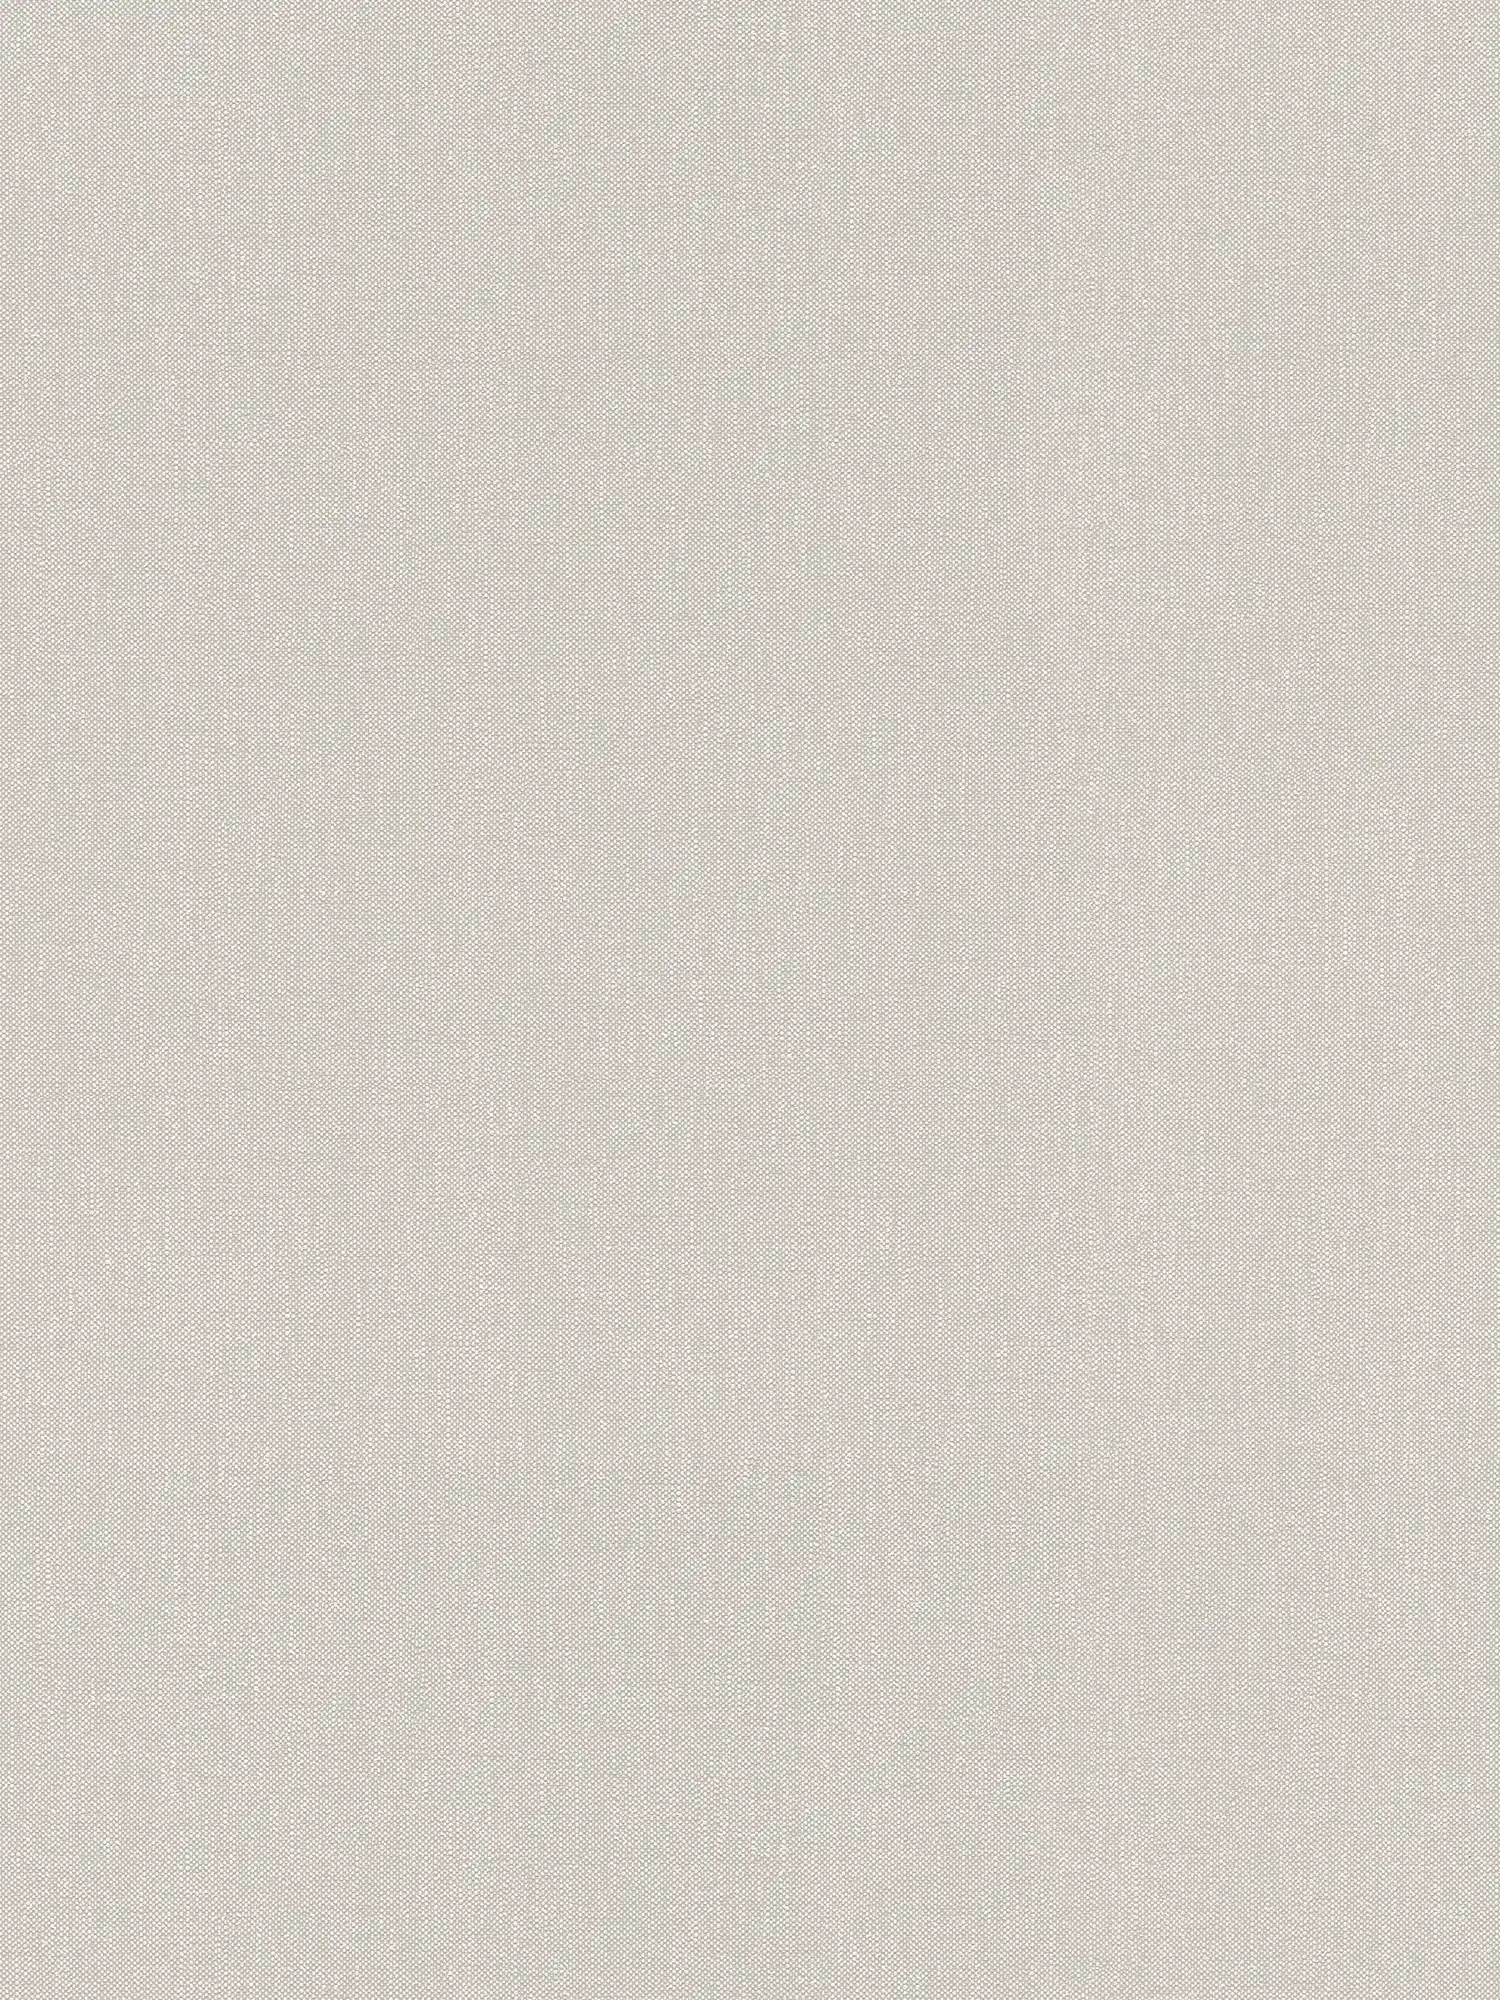 Plain wallpaper with textured pattern in linen look - beige
